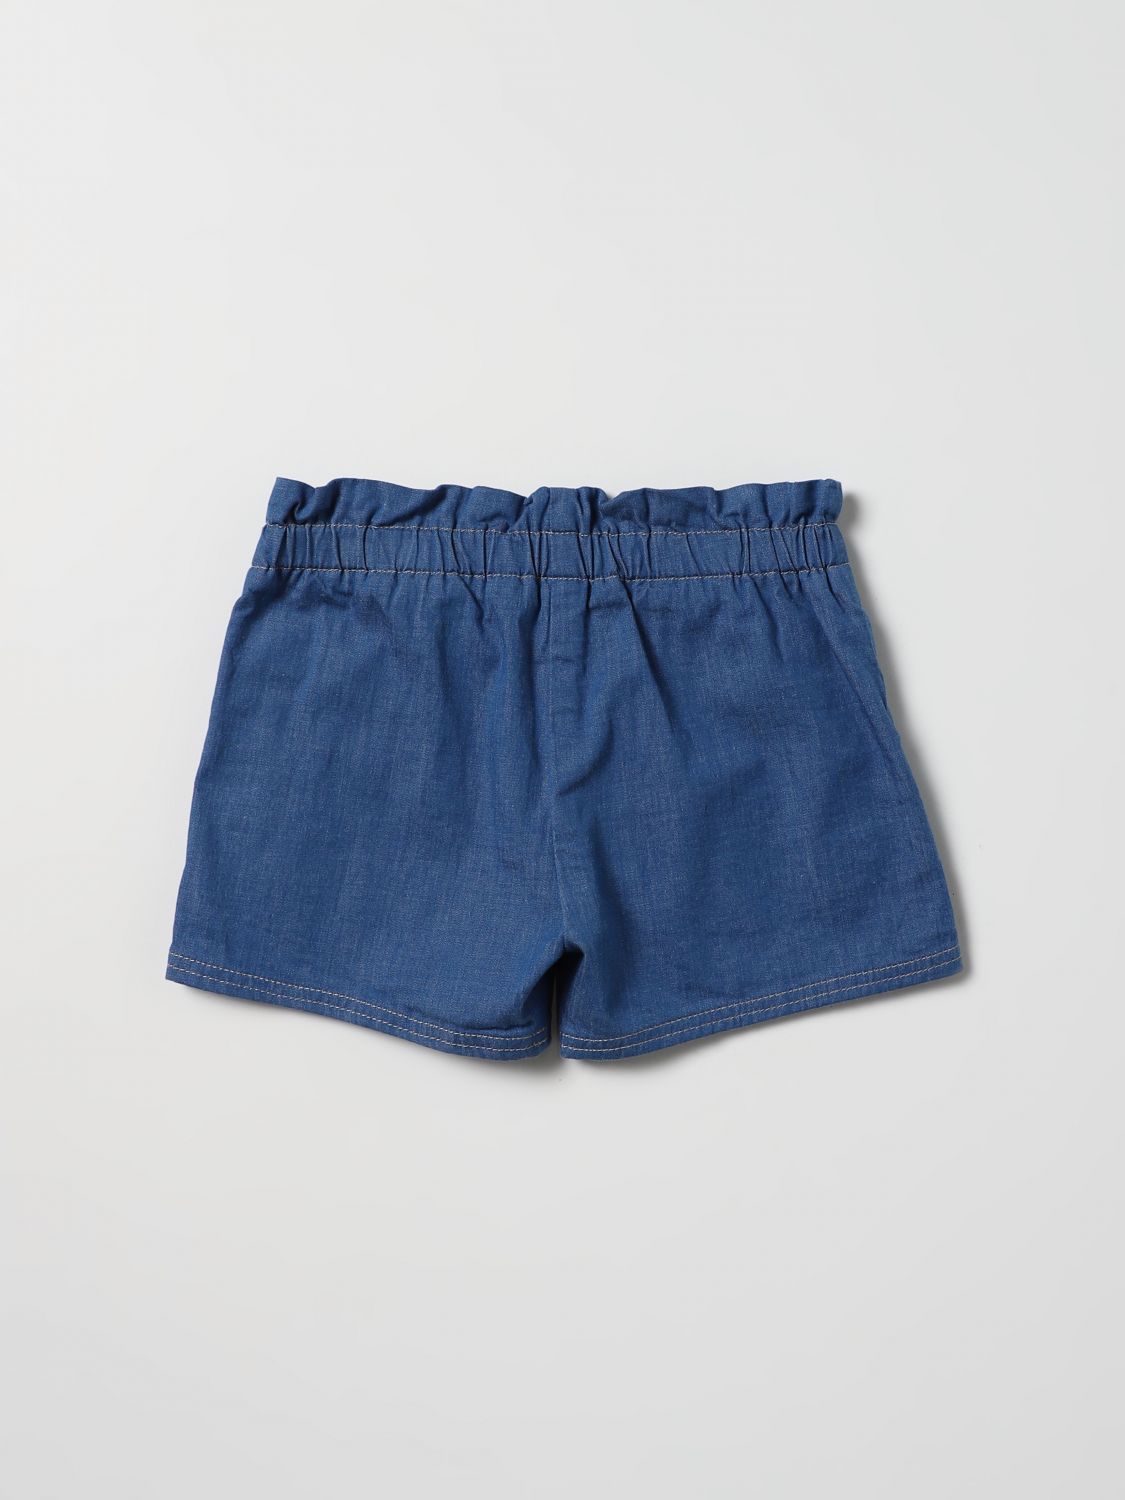 Shorts Moncler: Moncler Jungen Shorts hellblau 2